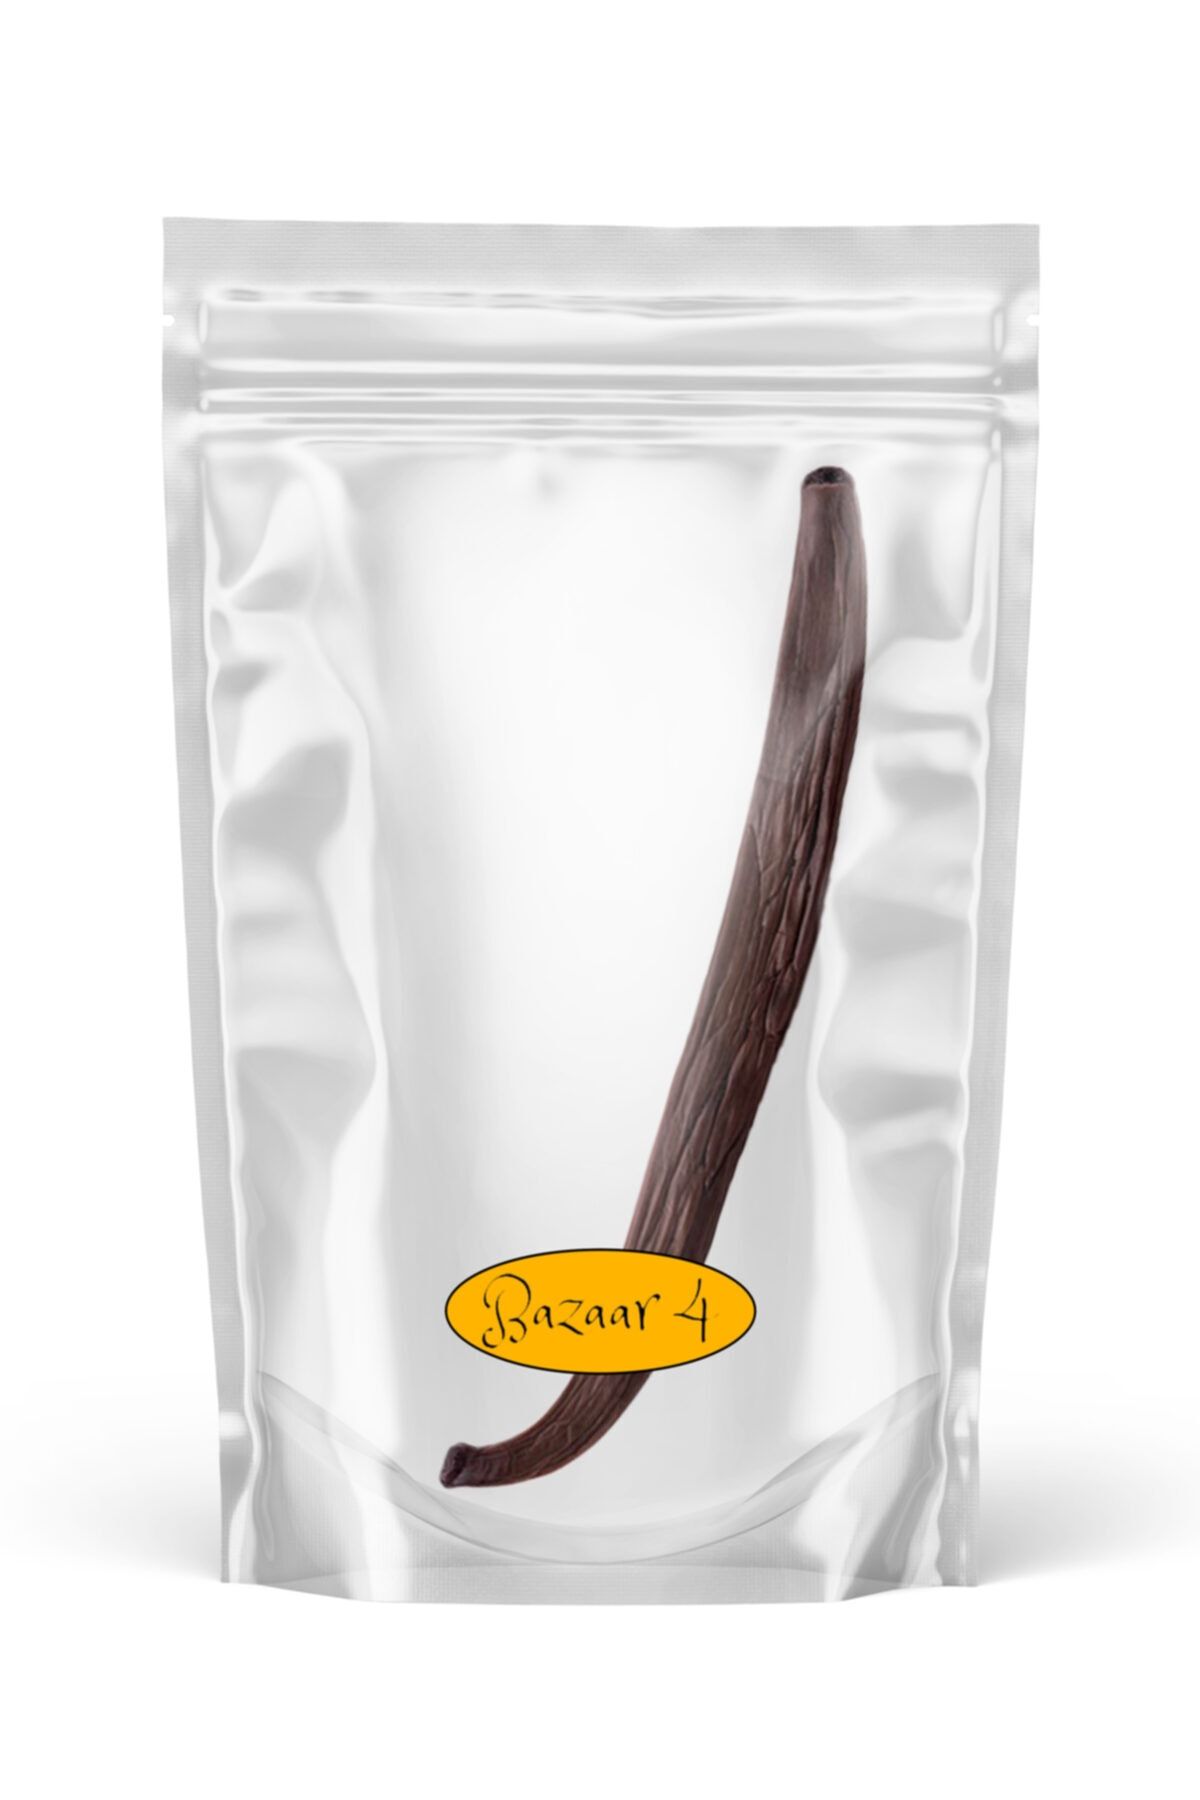 BAZAAR 4 Vanilya Çubuk 1 Adet %100 Doğal Yeni Mahsul Vanilla Stick